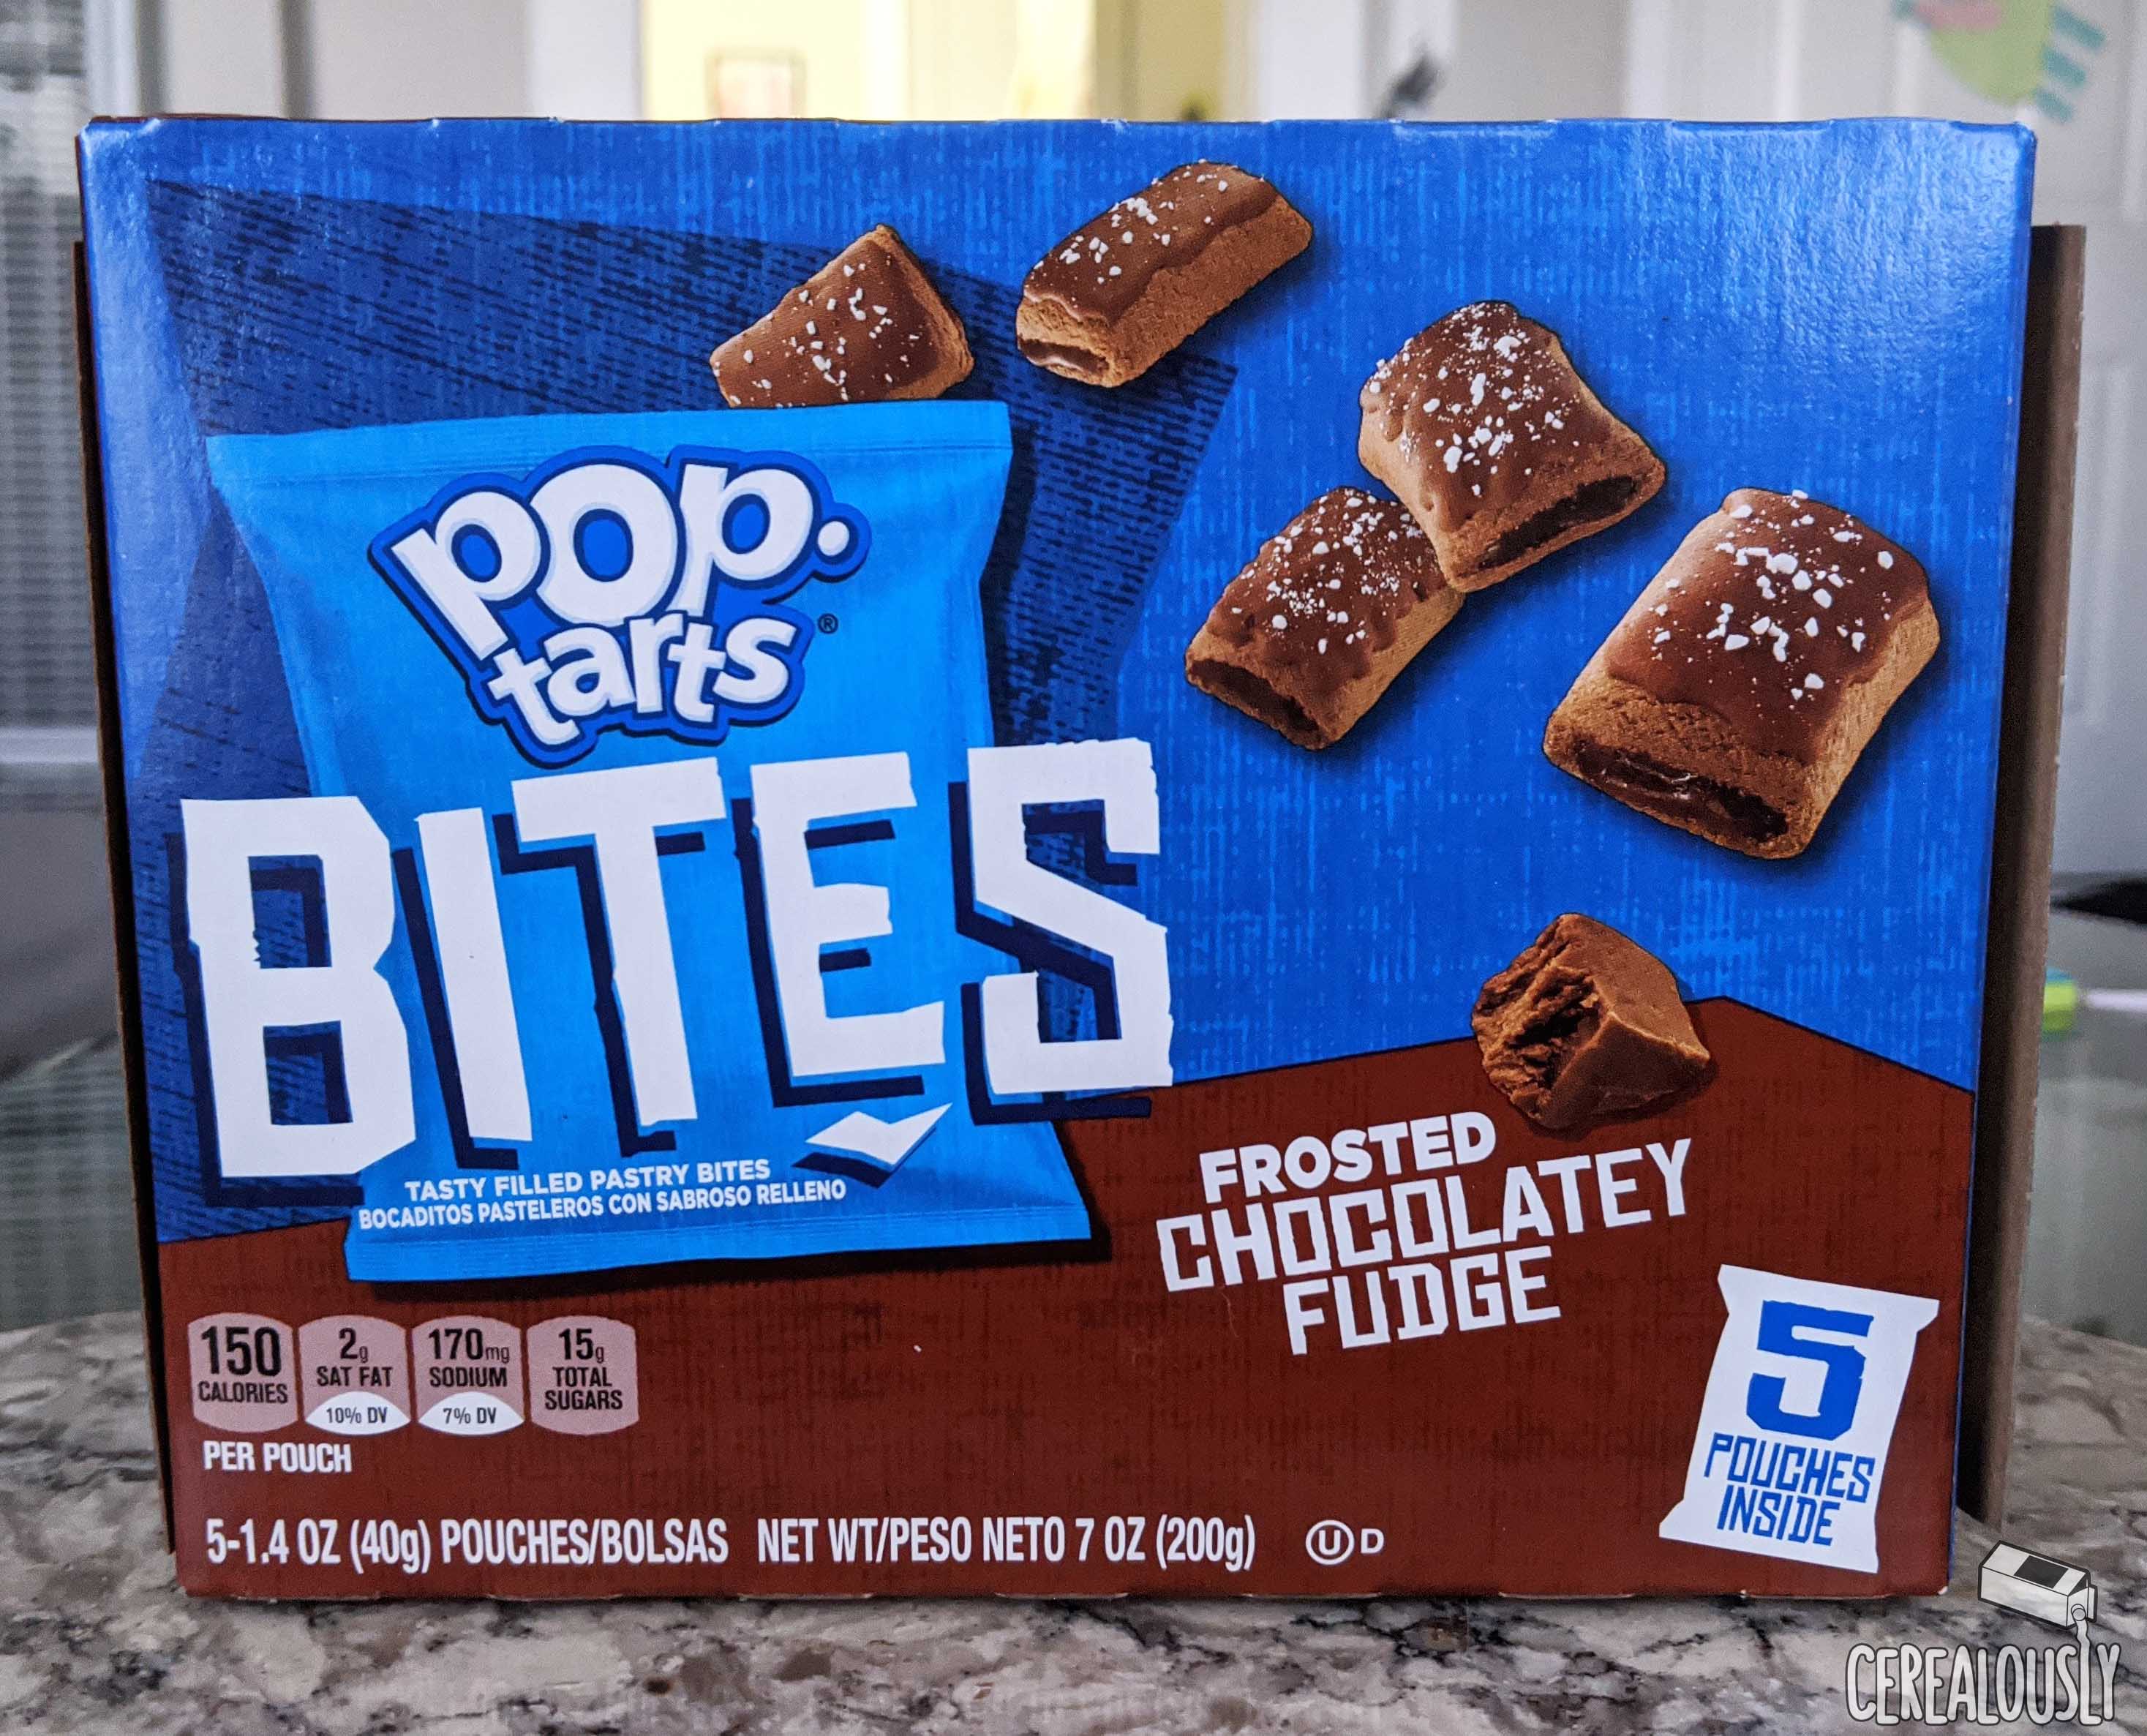 Review: Chocolatey Fudge Pop-Tarts Bites.